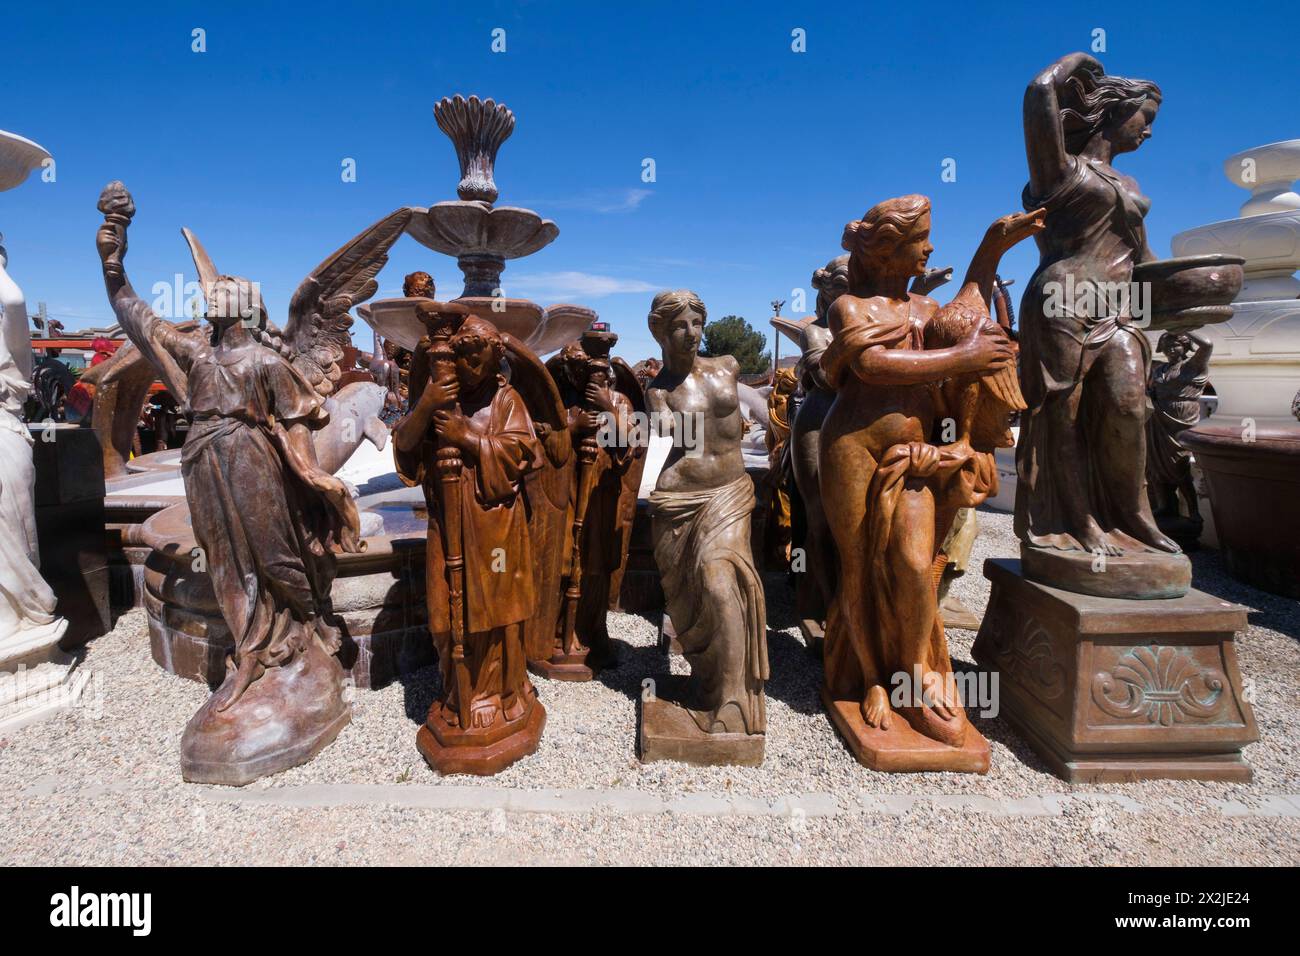 Statues and concrete decorative objects at World Concrete Precast, Victorville, California Stock Photo